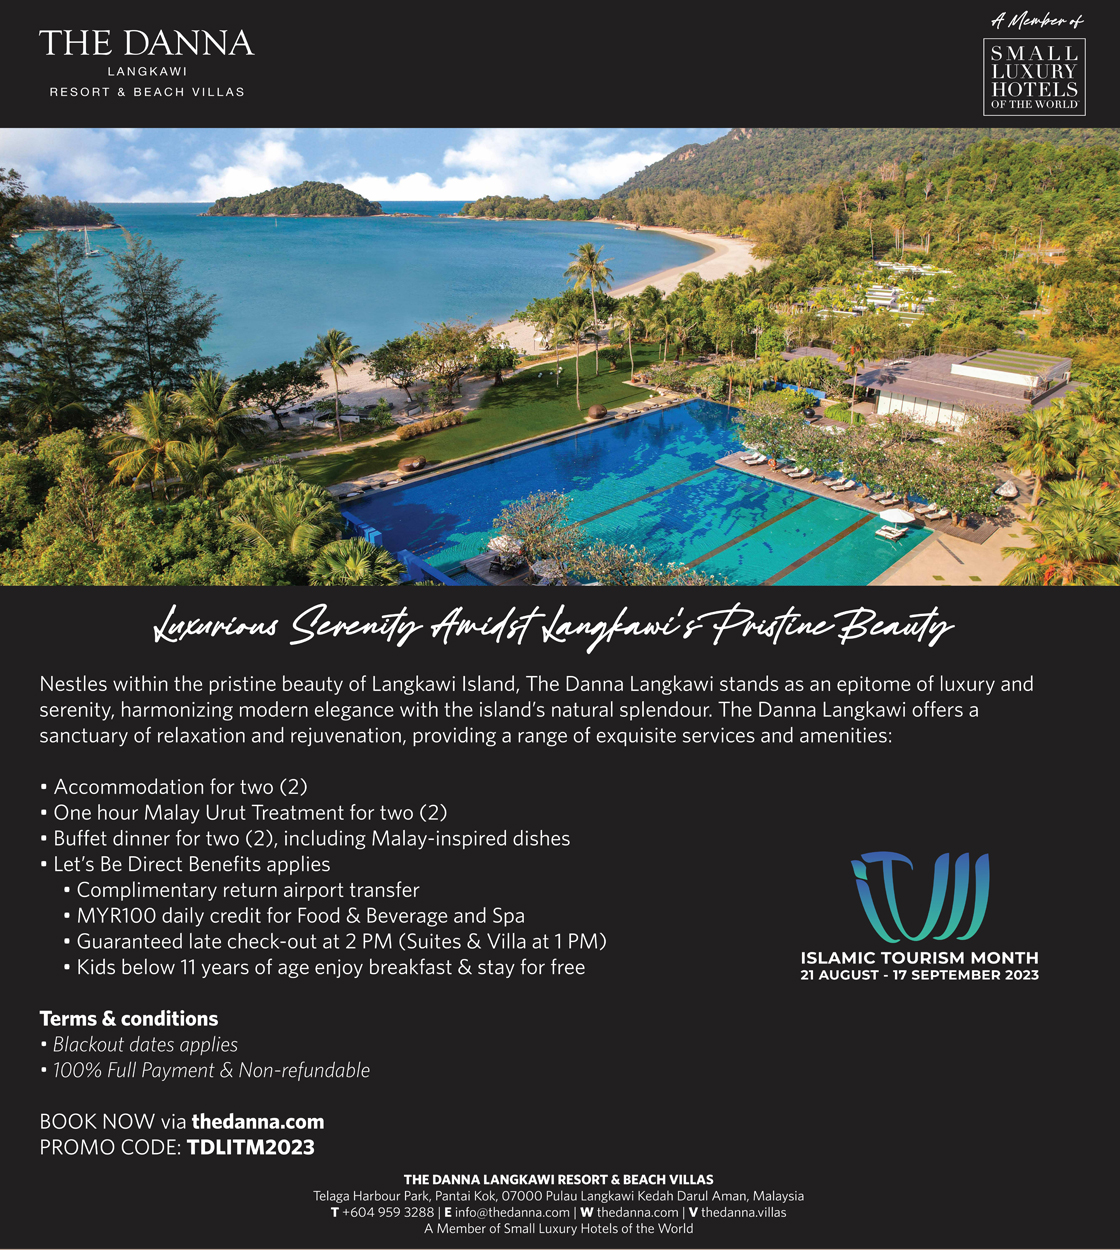 The Danna Langkawi Resort and Beach Villas